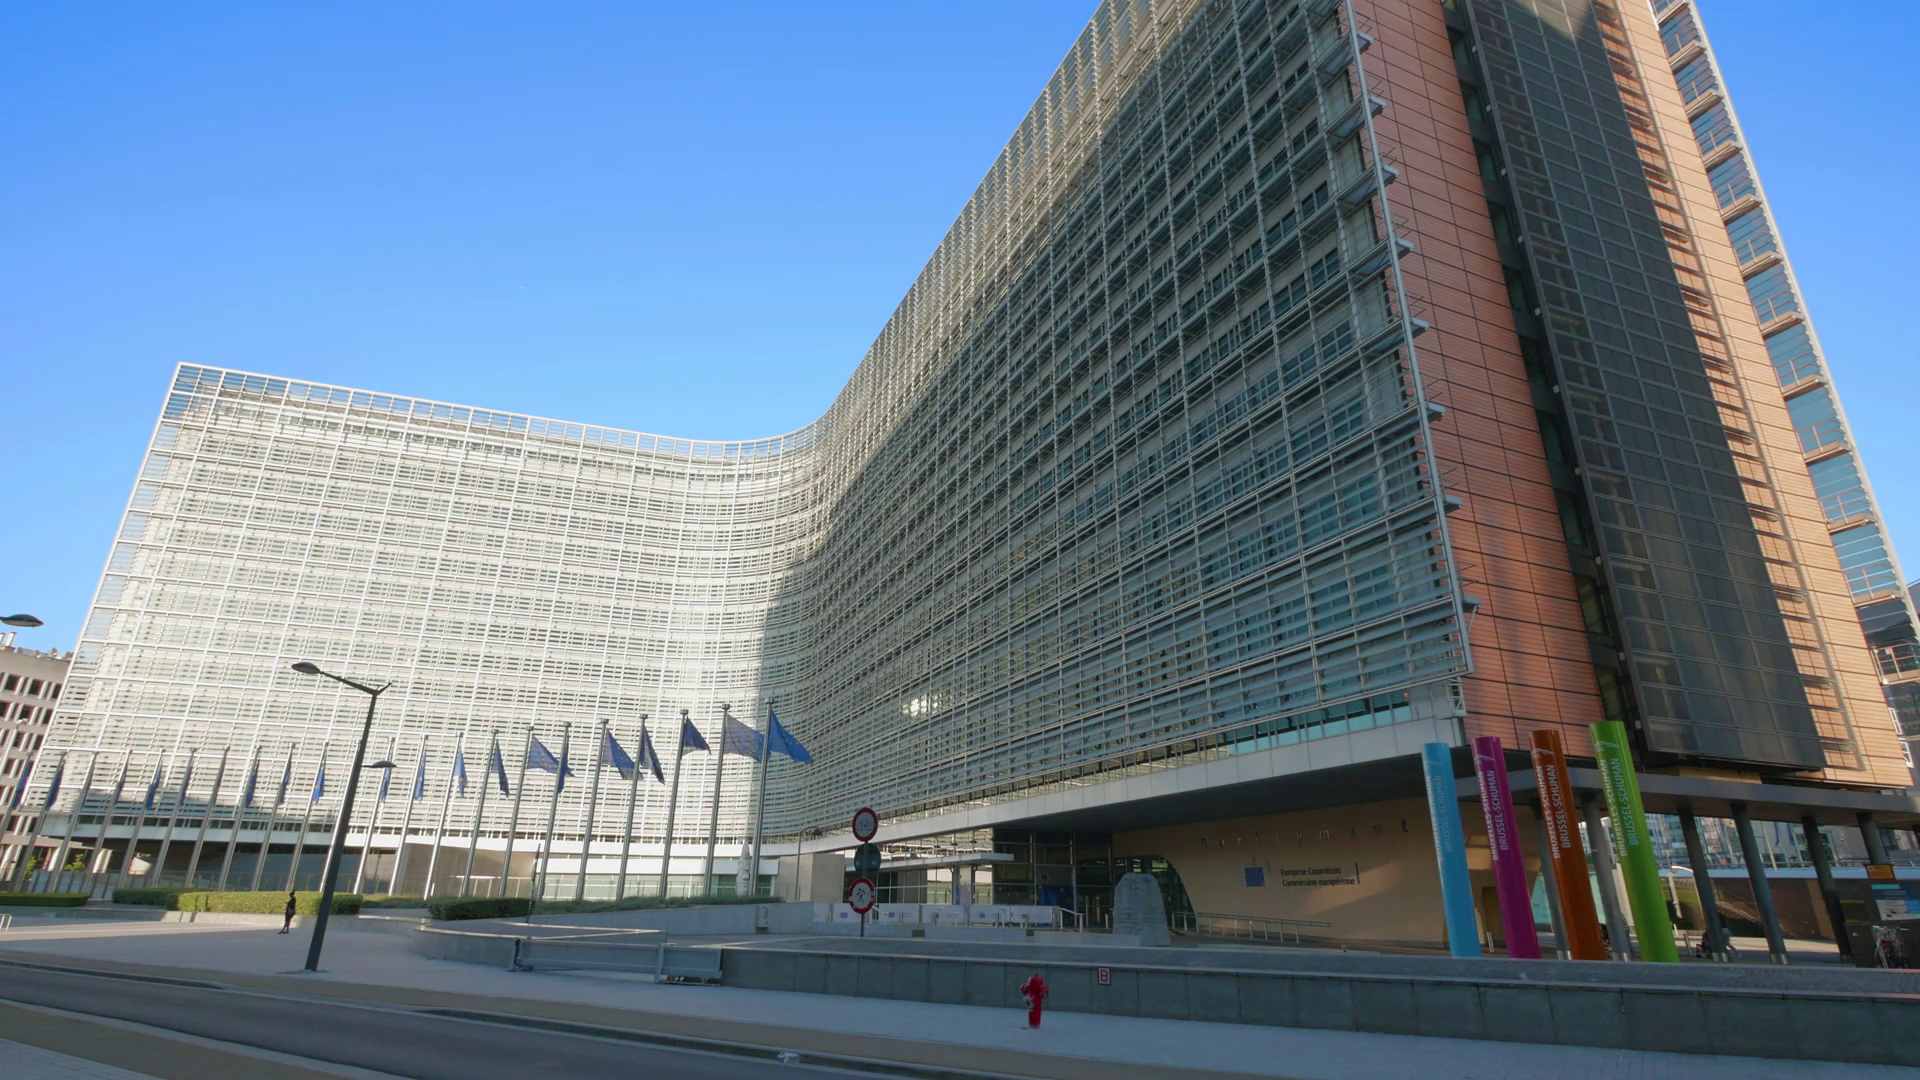 berlaymont-office-building-european-commission-eu-union-flags-waving-brussels-belgium-sunny-day_hg9ptzc5_thumbnail-full01.png